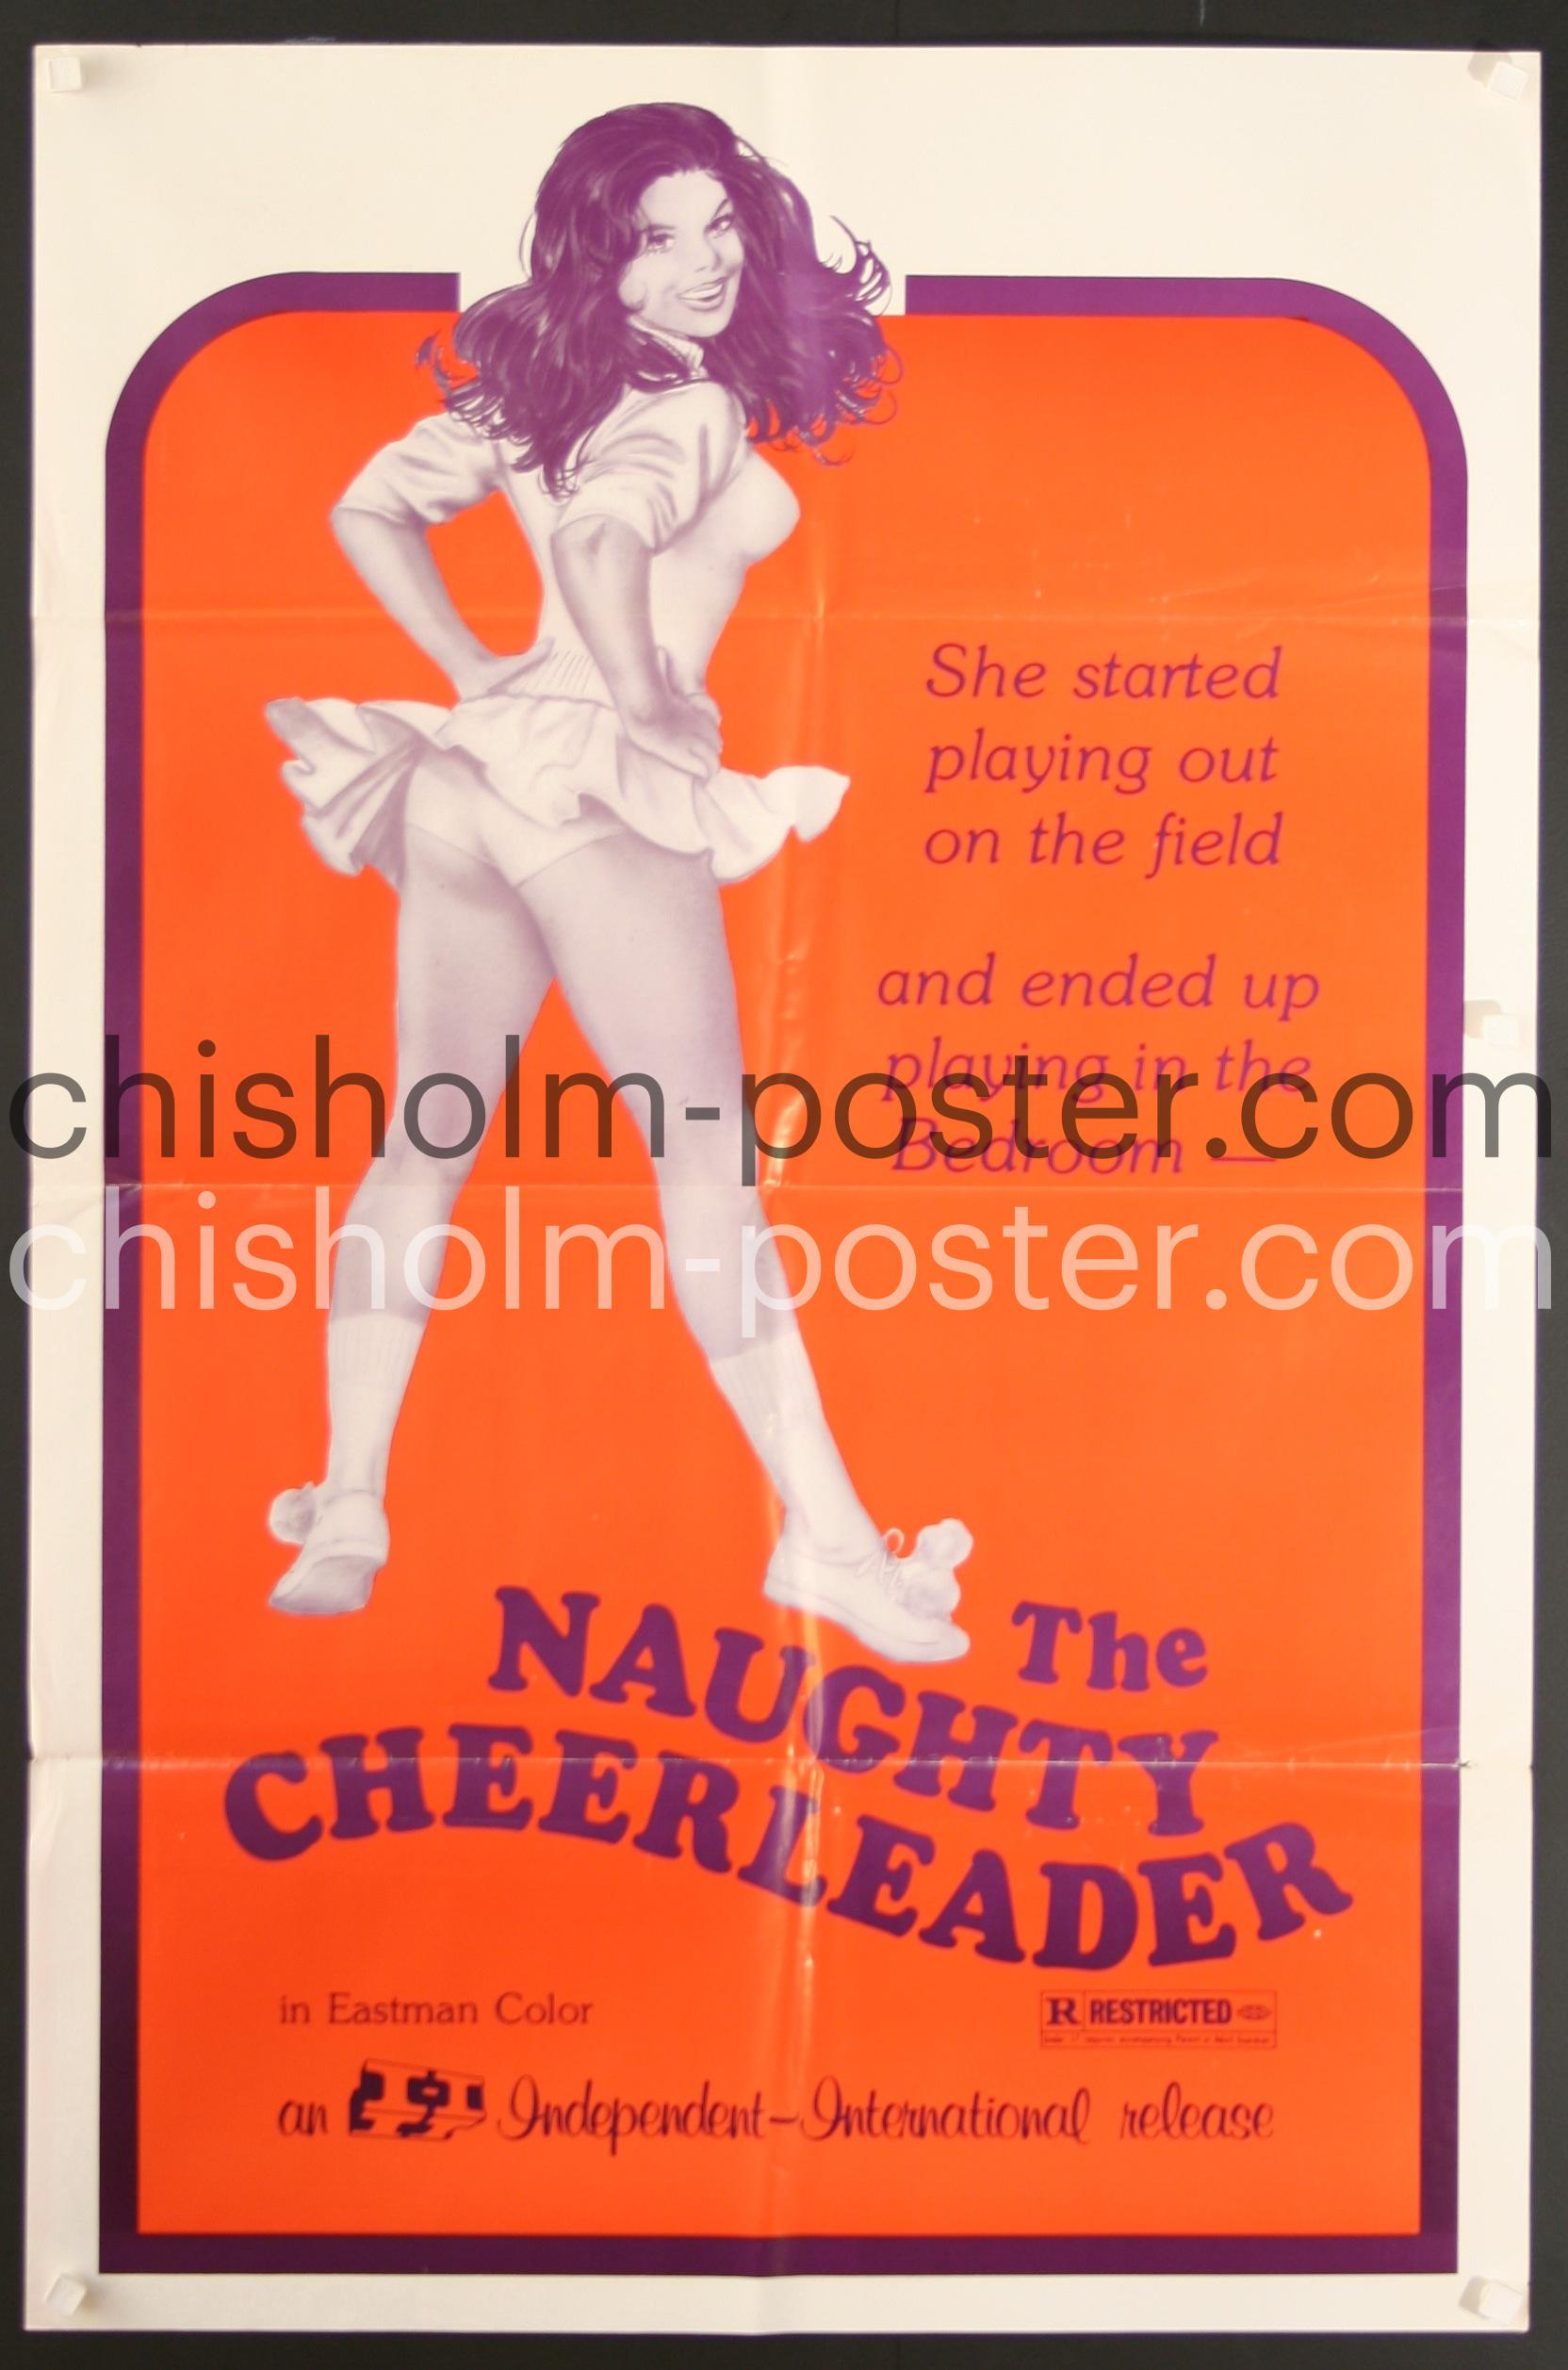 Best of Naughty cheerleader photos